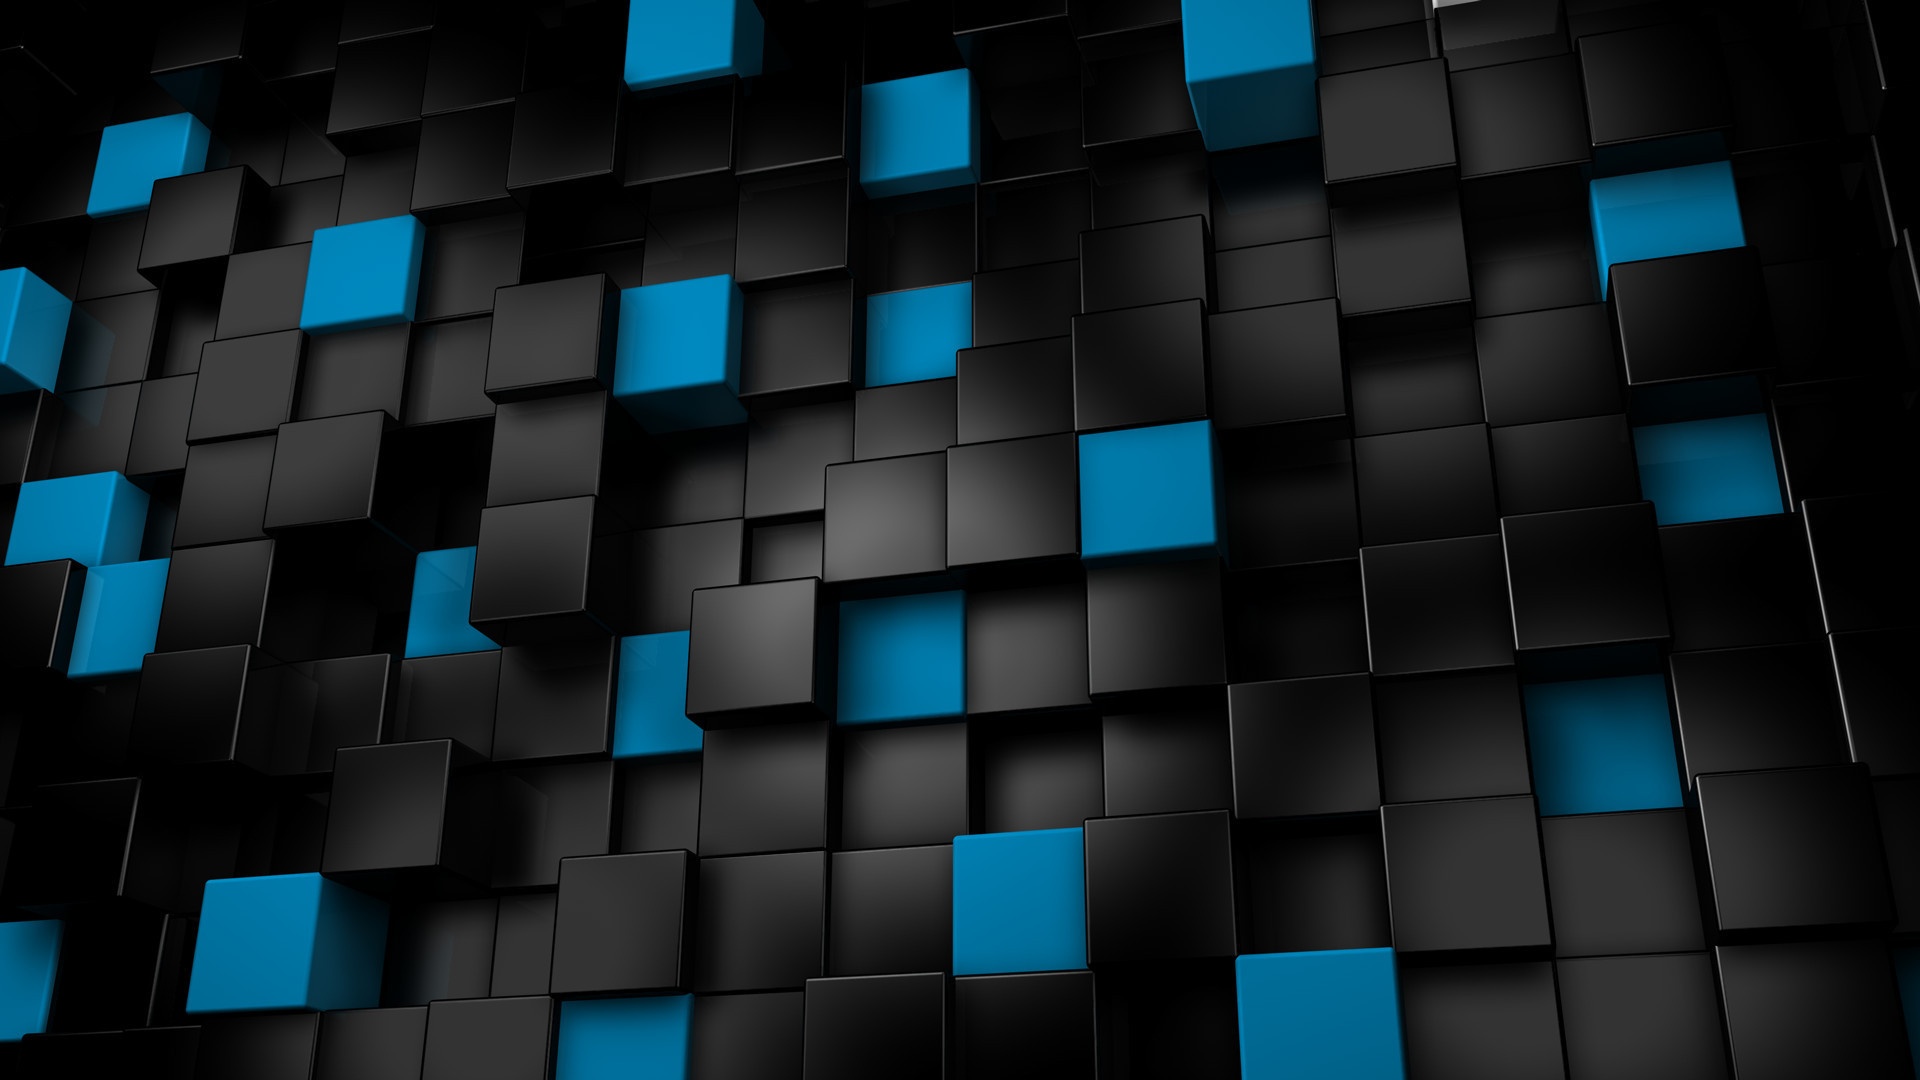 feedionetcubes hdtv 1080p 1080p 3d abstract blue cubes hd hdtv